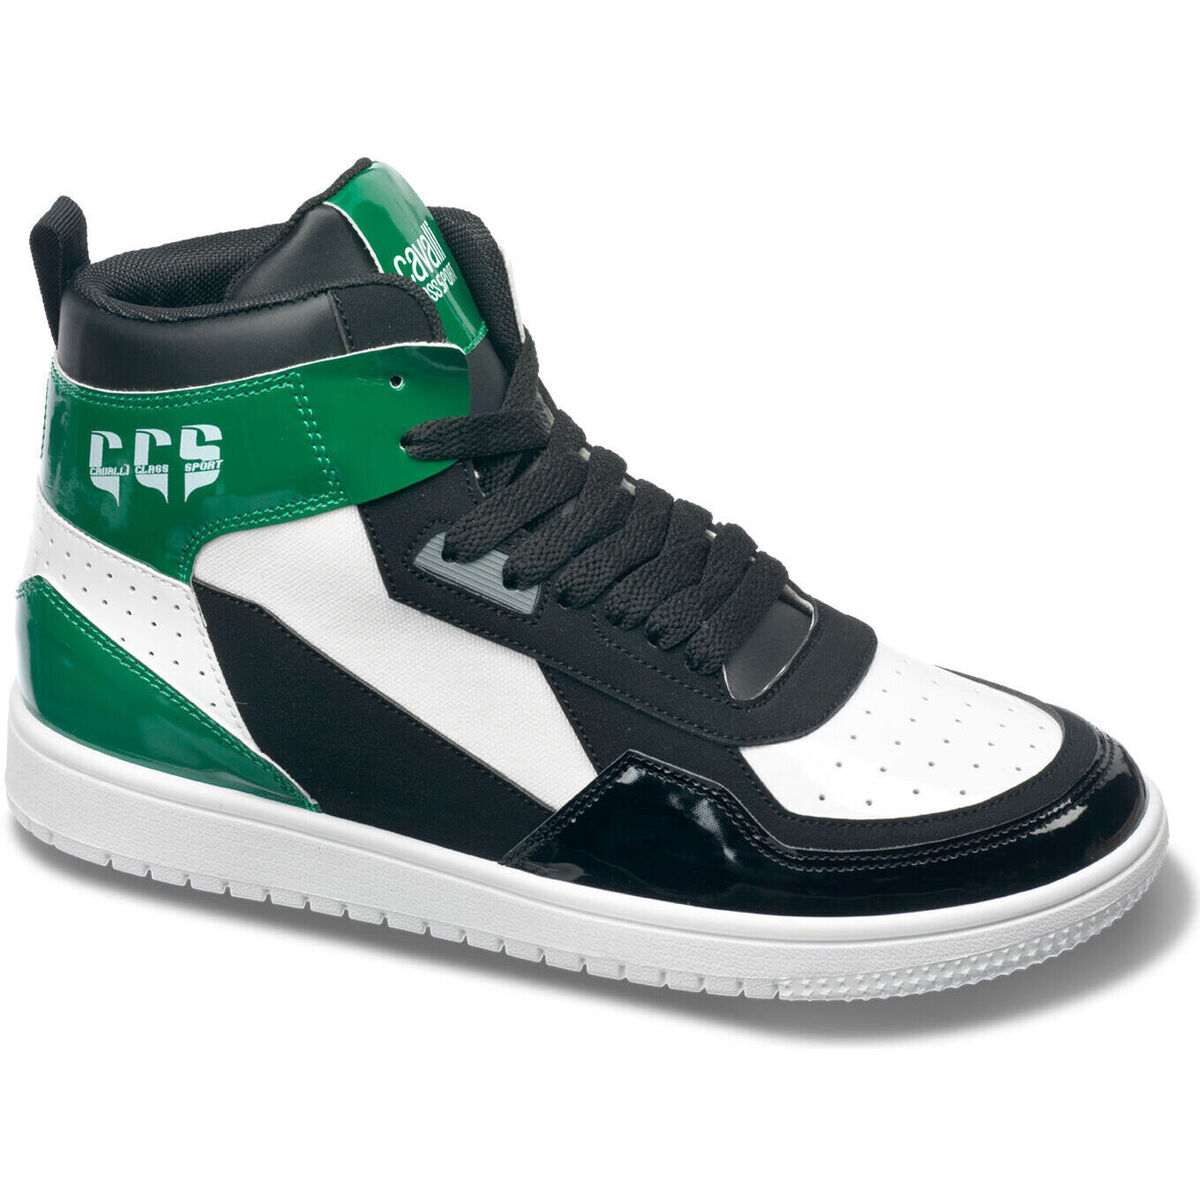 Sneakers Roberto Cavalli - CM8804 Green